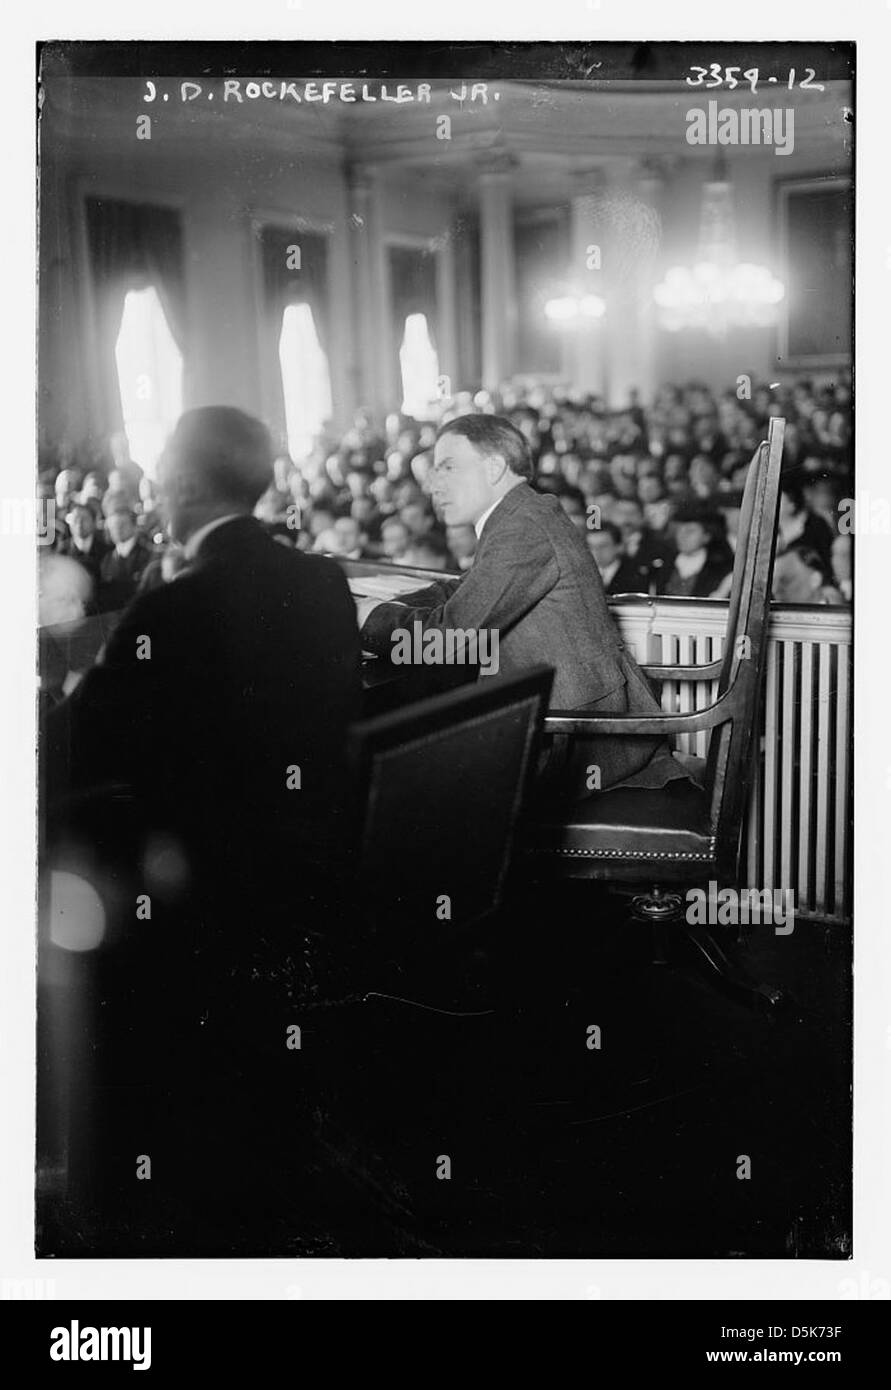 J.D. Rockefeller, Jr. on stand, 1/25/15 (LOC) Stock Photo